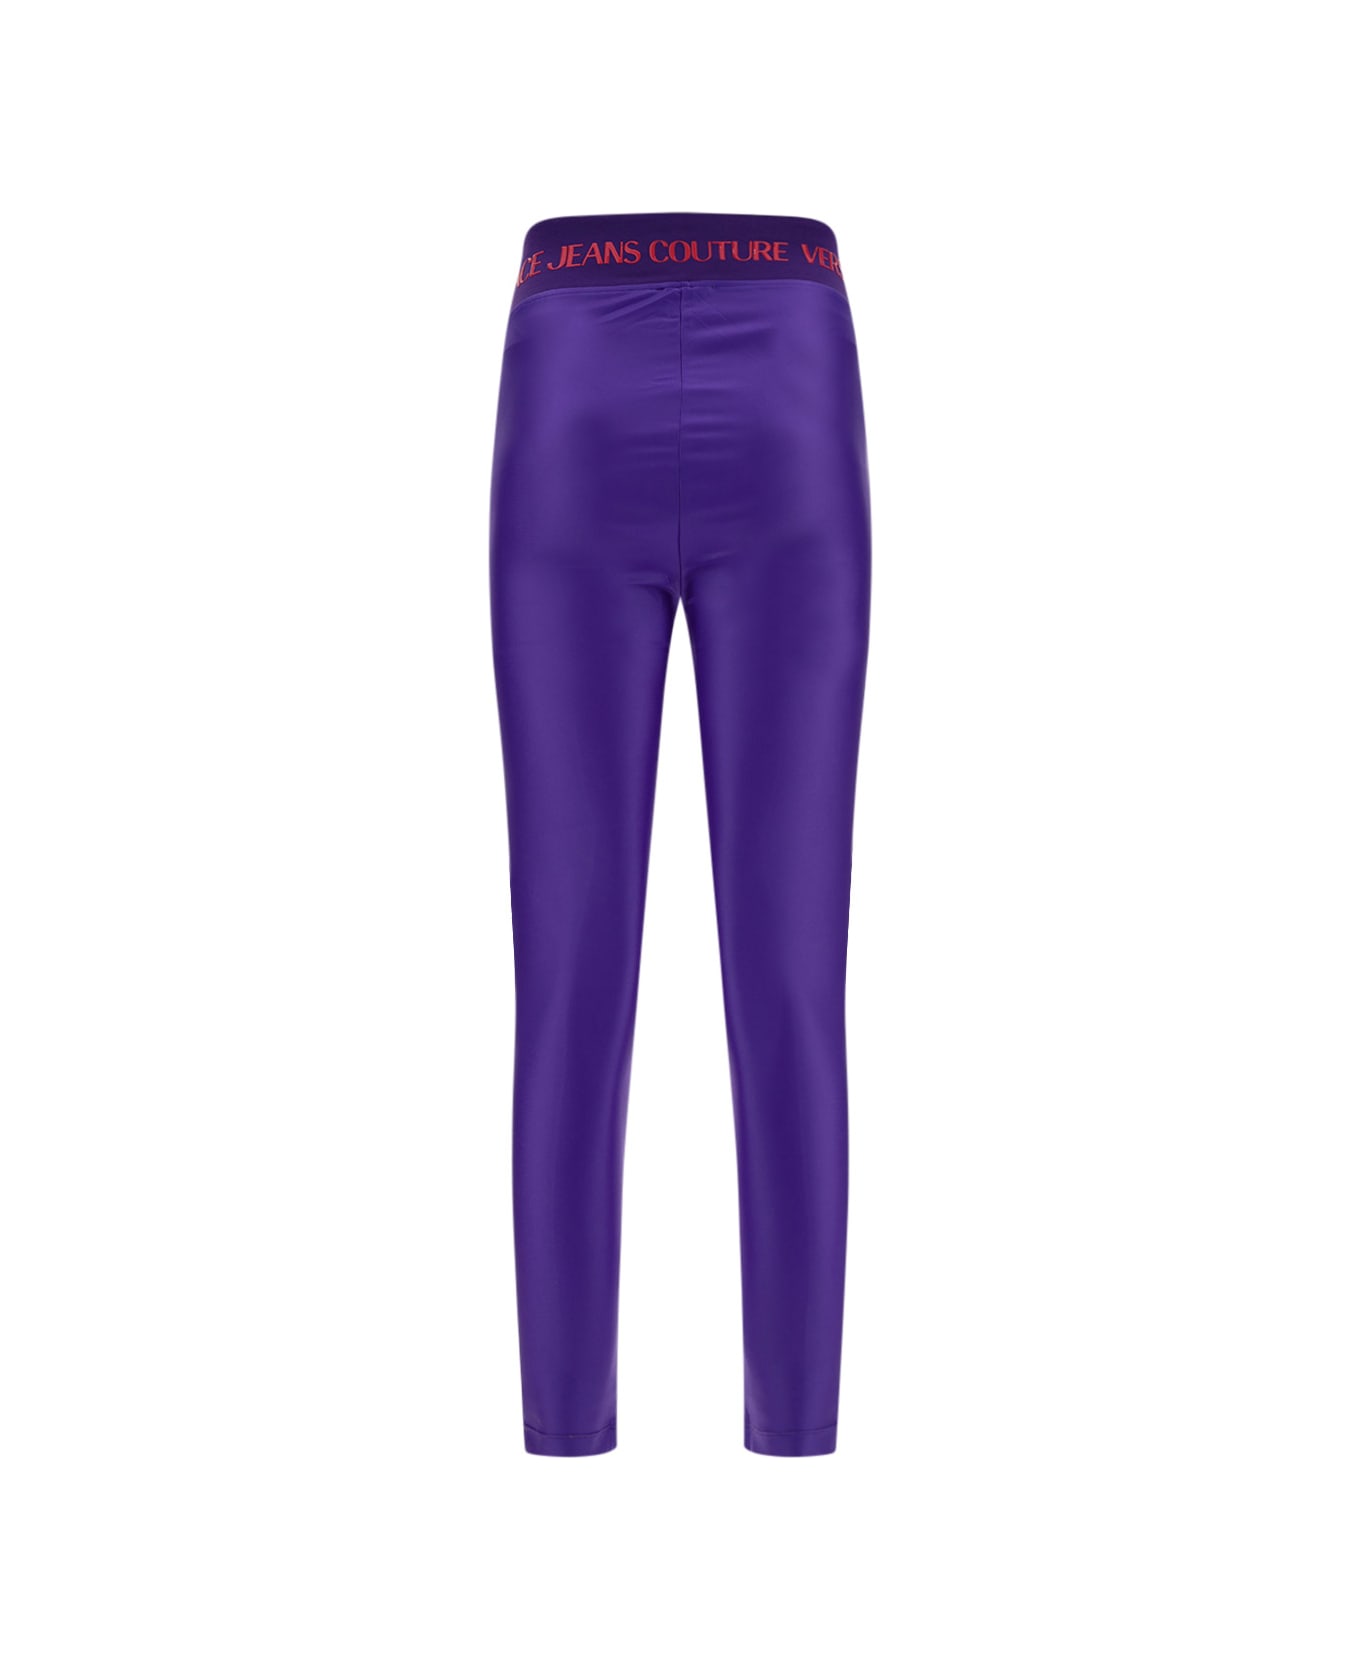 Versace Jeans Couture Leggings - Violet